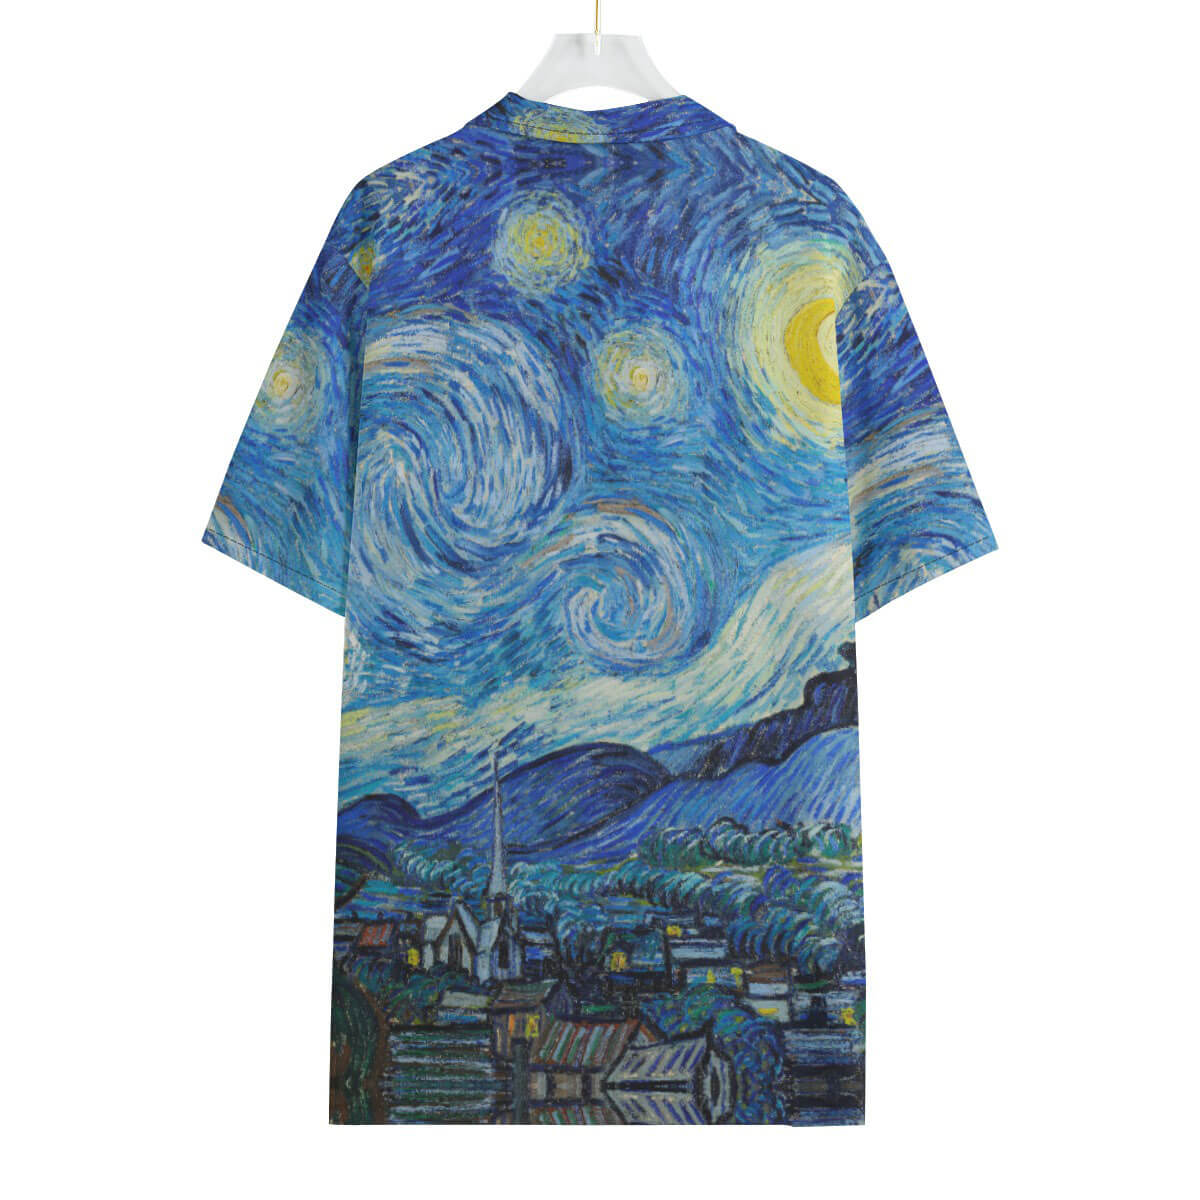 Close-up of Starry Night print on artistic Hawaiian shirt fabric